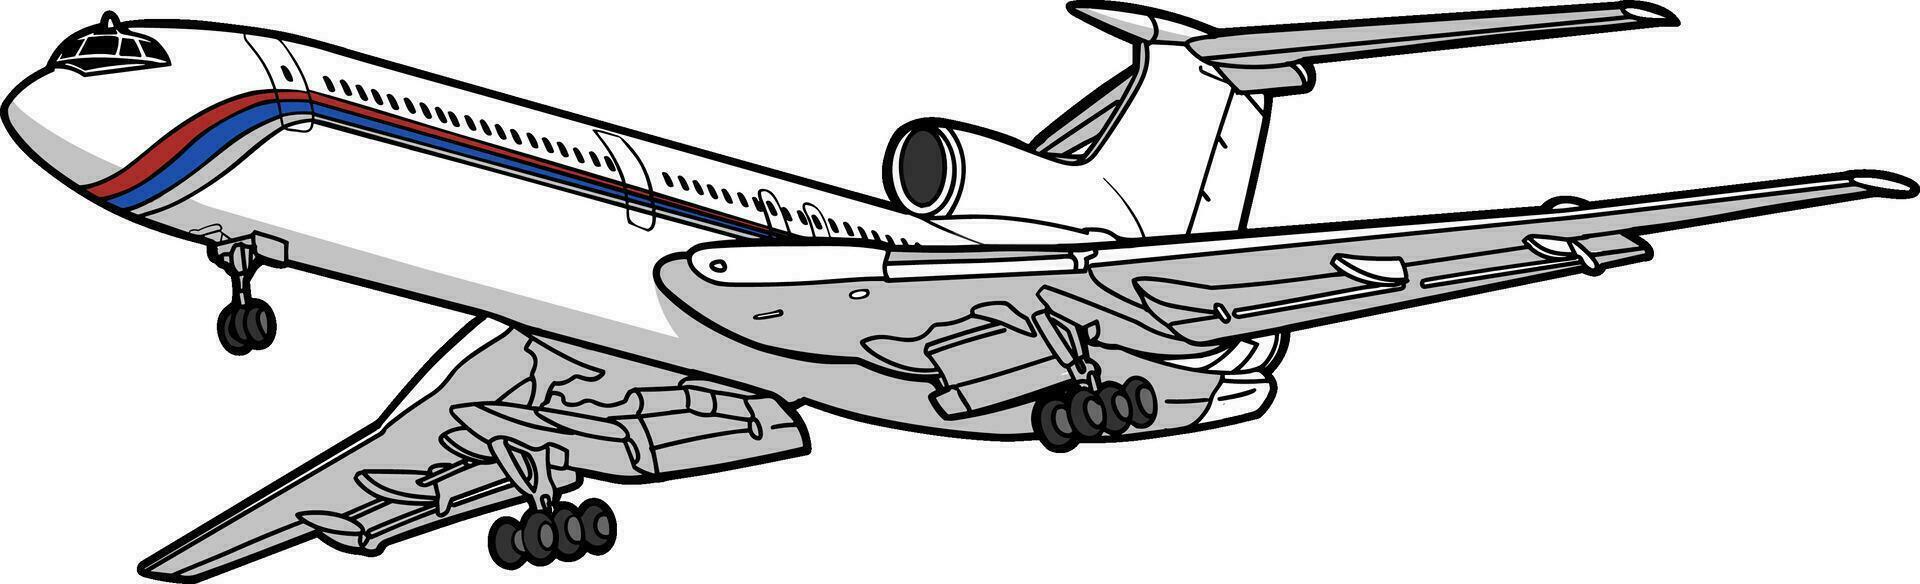 vliegtuig vliegend lucht vervoer illustratie vector